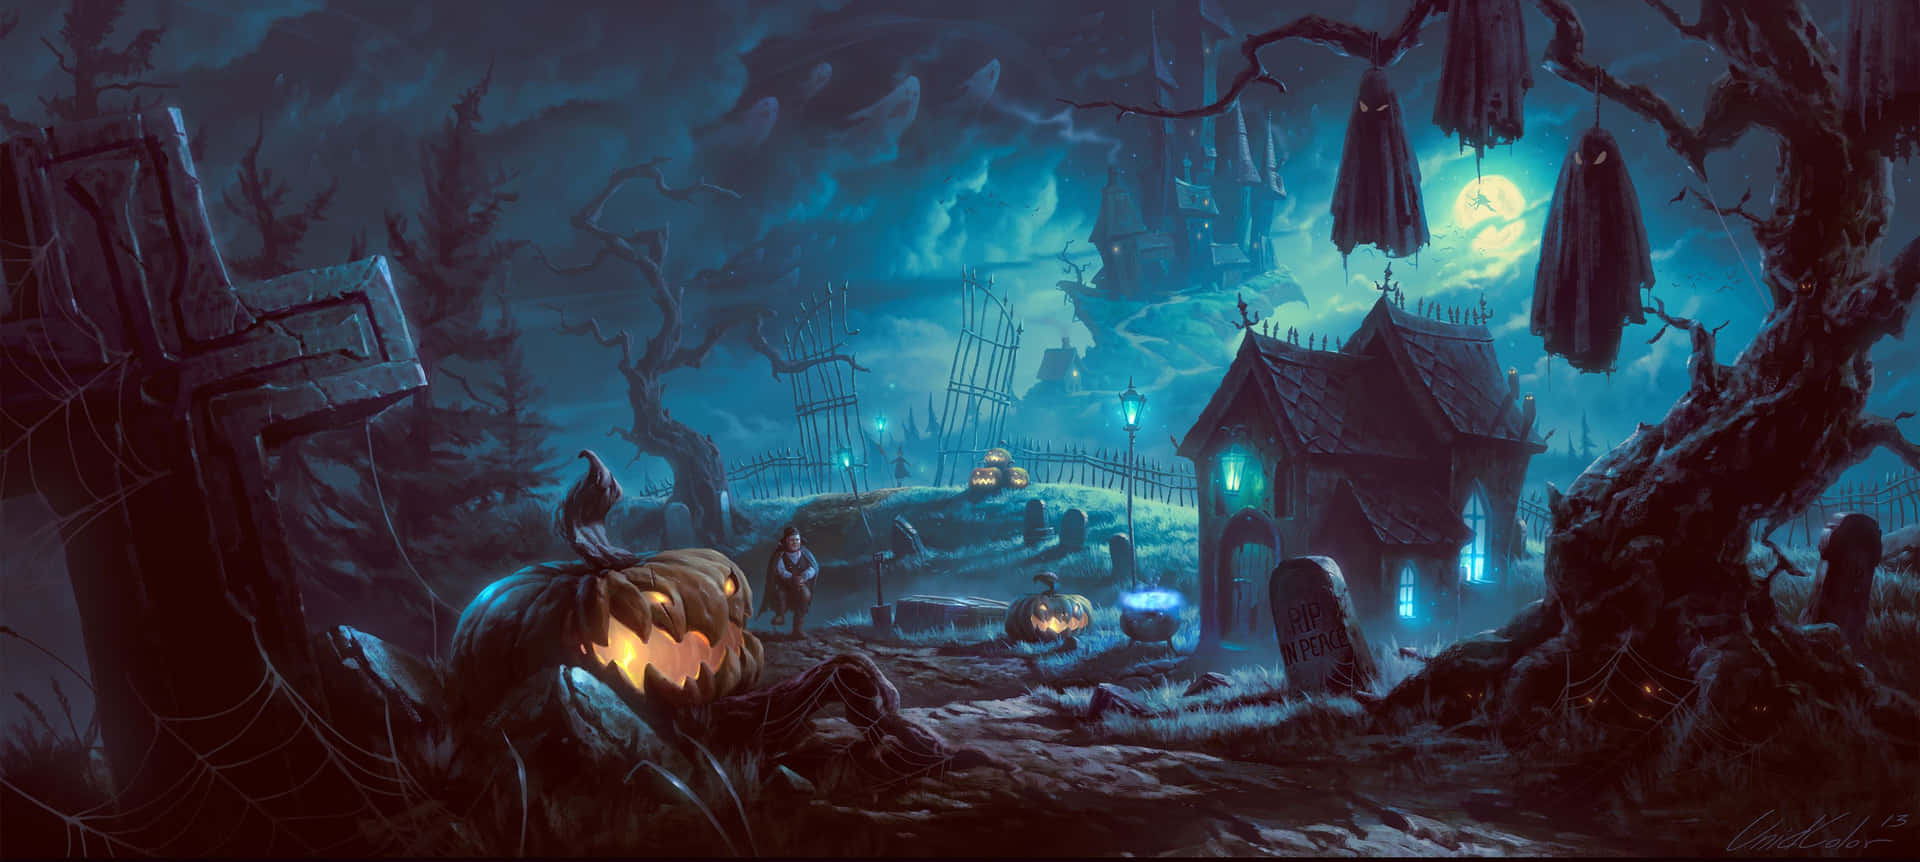 Image  Celebrate Spooky Halloween in Style